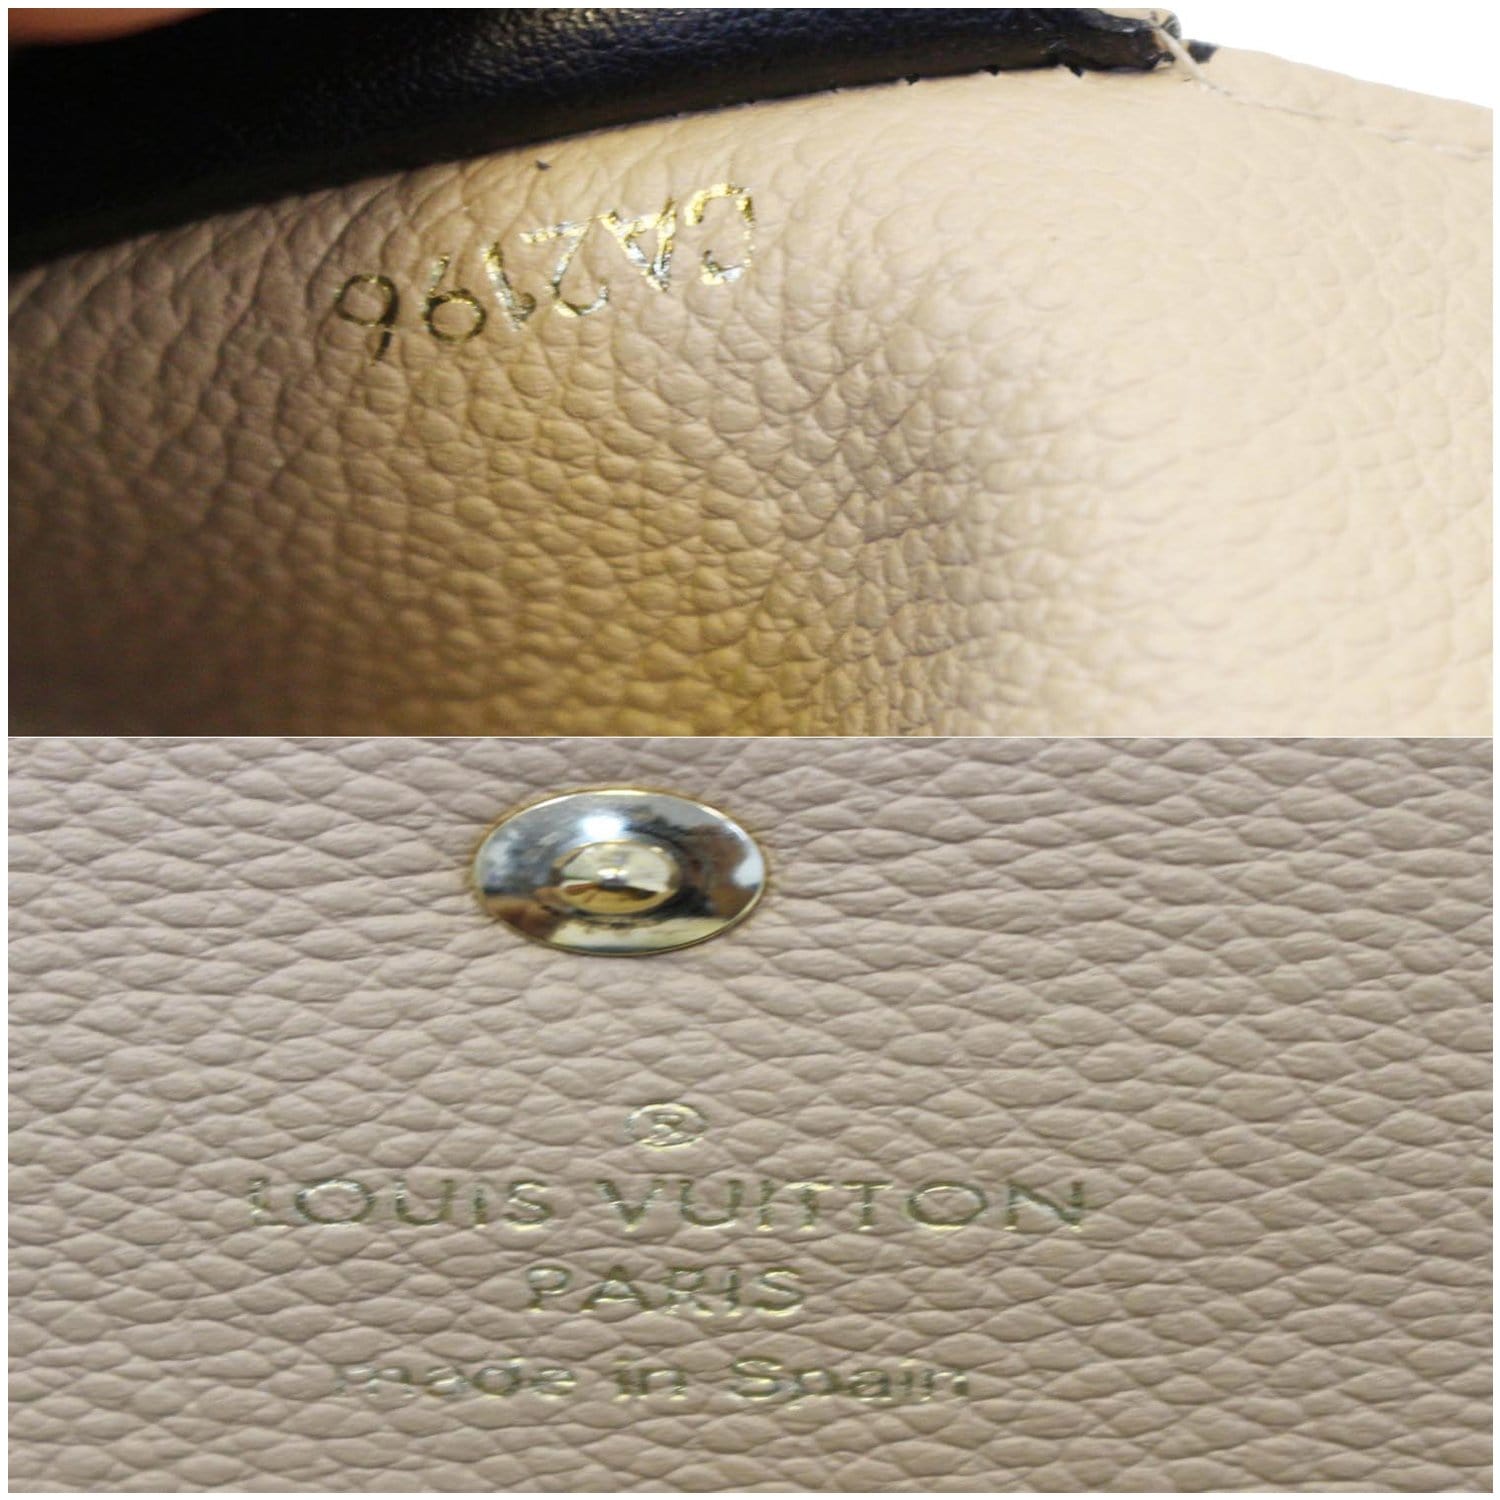 Louis Vuitton Clémence Wallet Black/Beige Monogram Empreinte